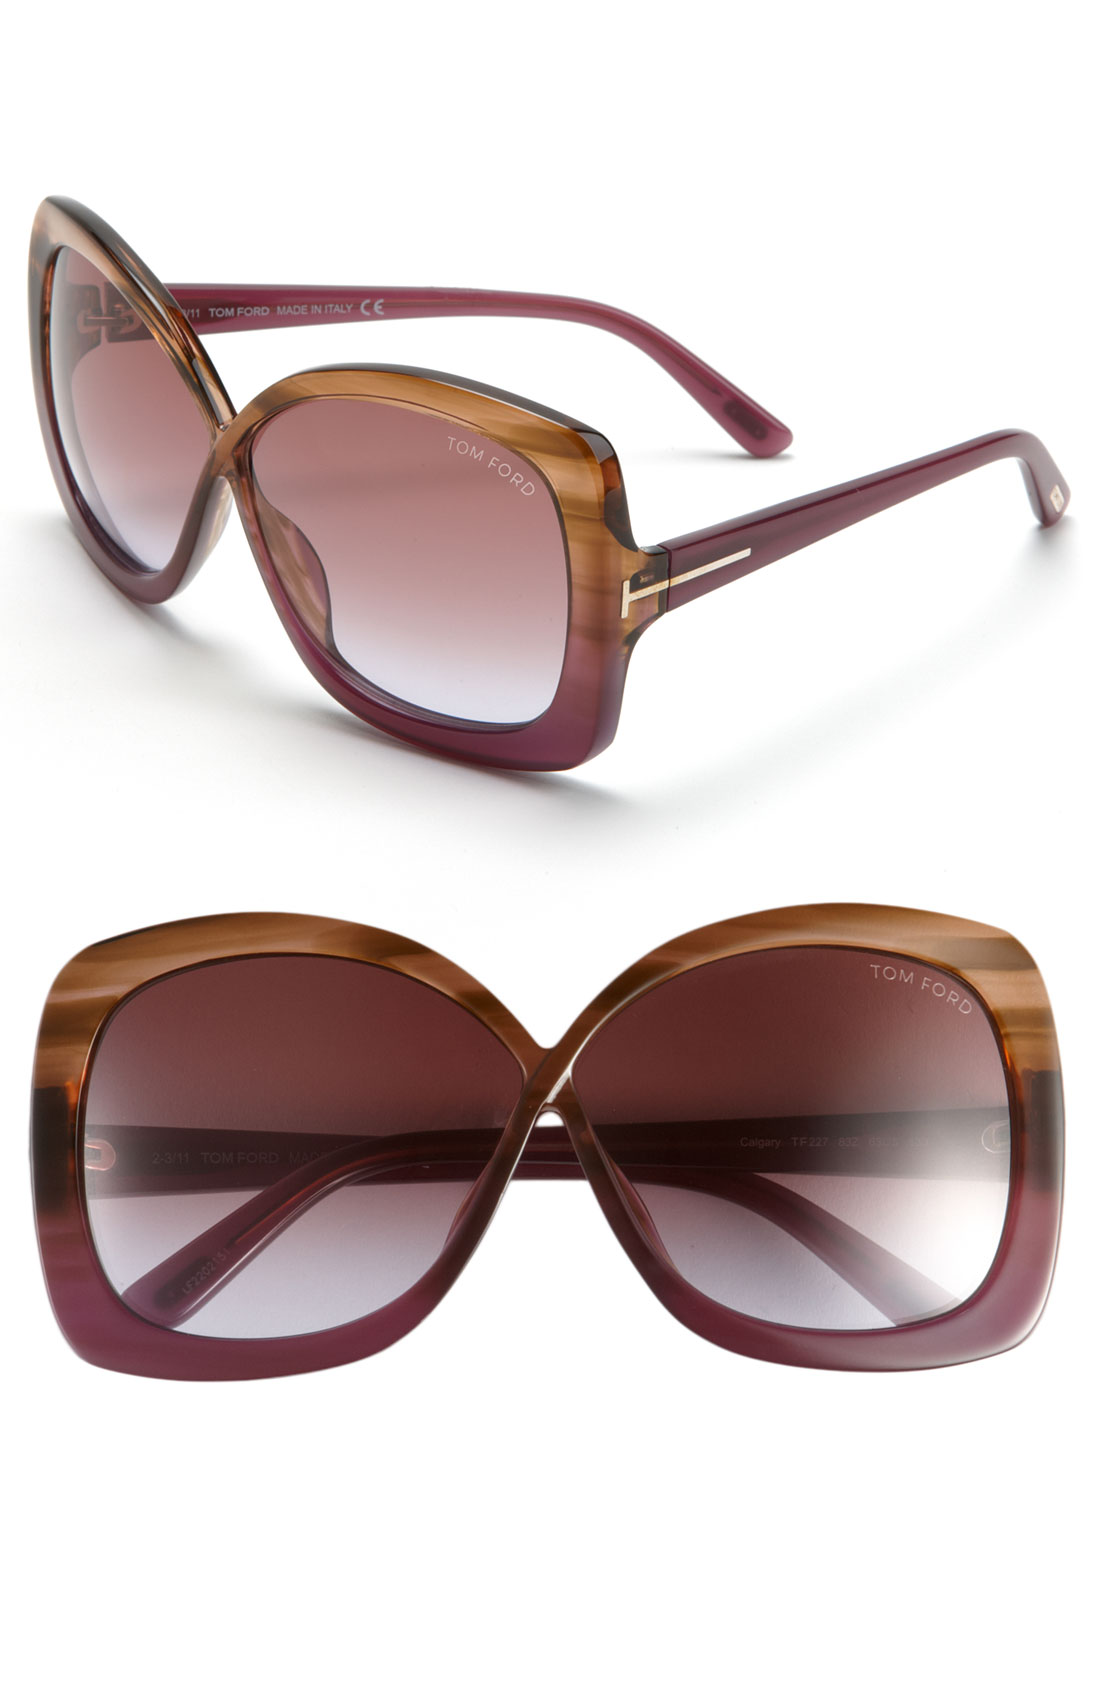 Tom ford calgary square oversized sunglasses #10